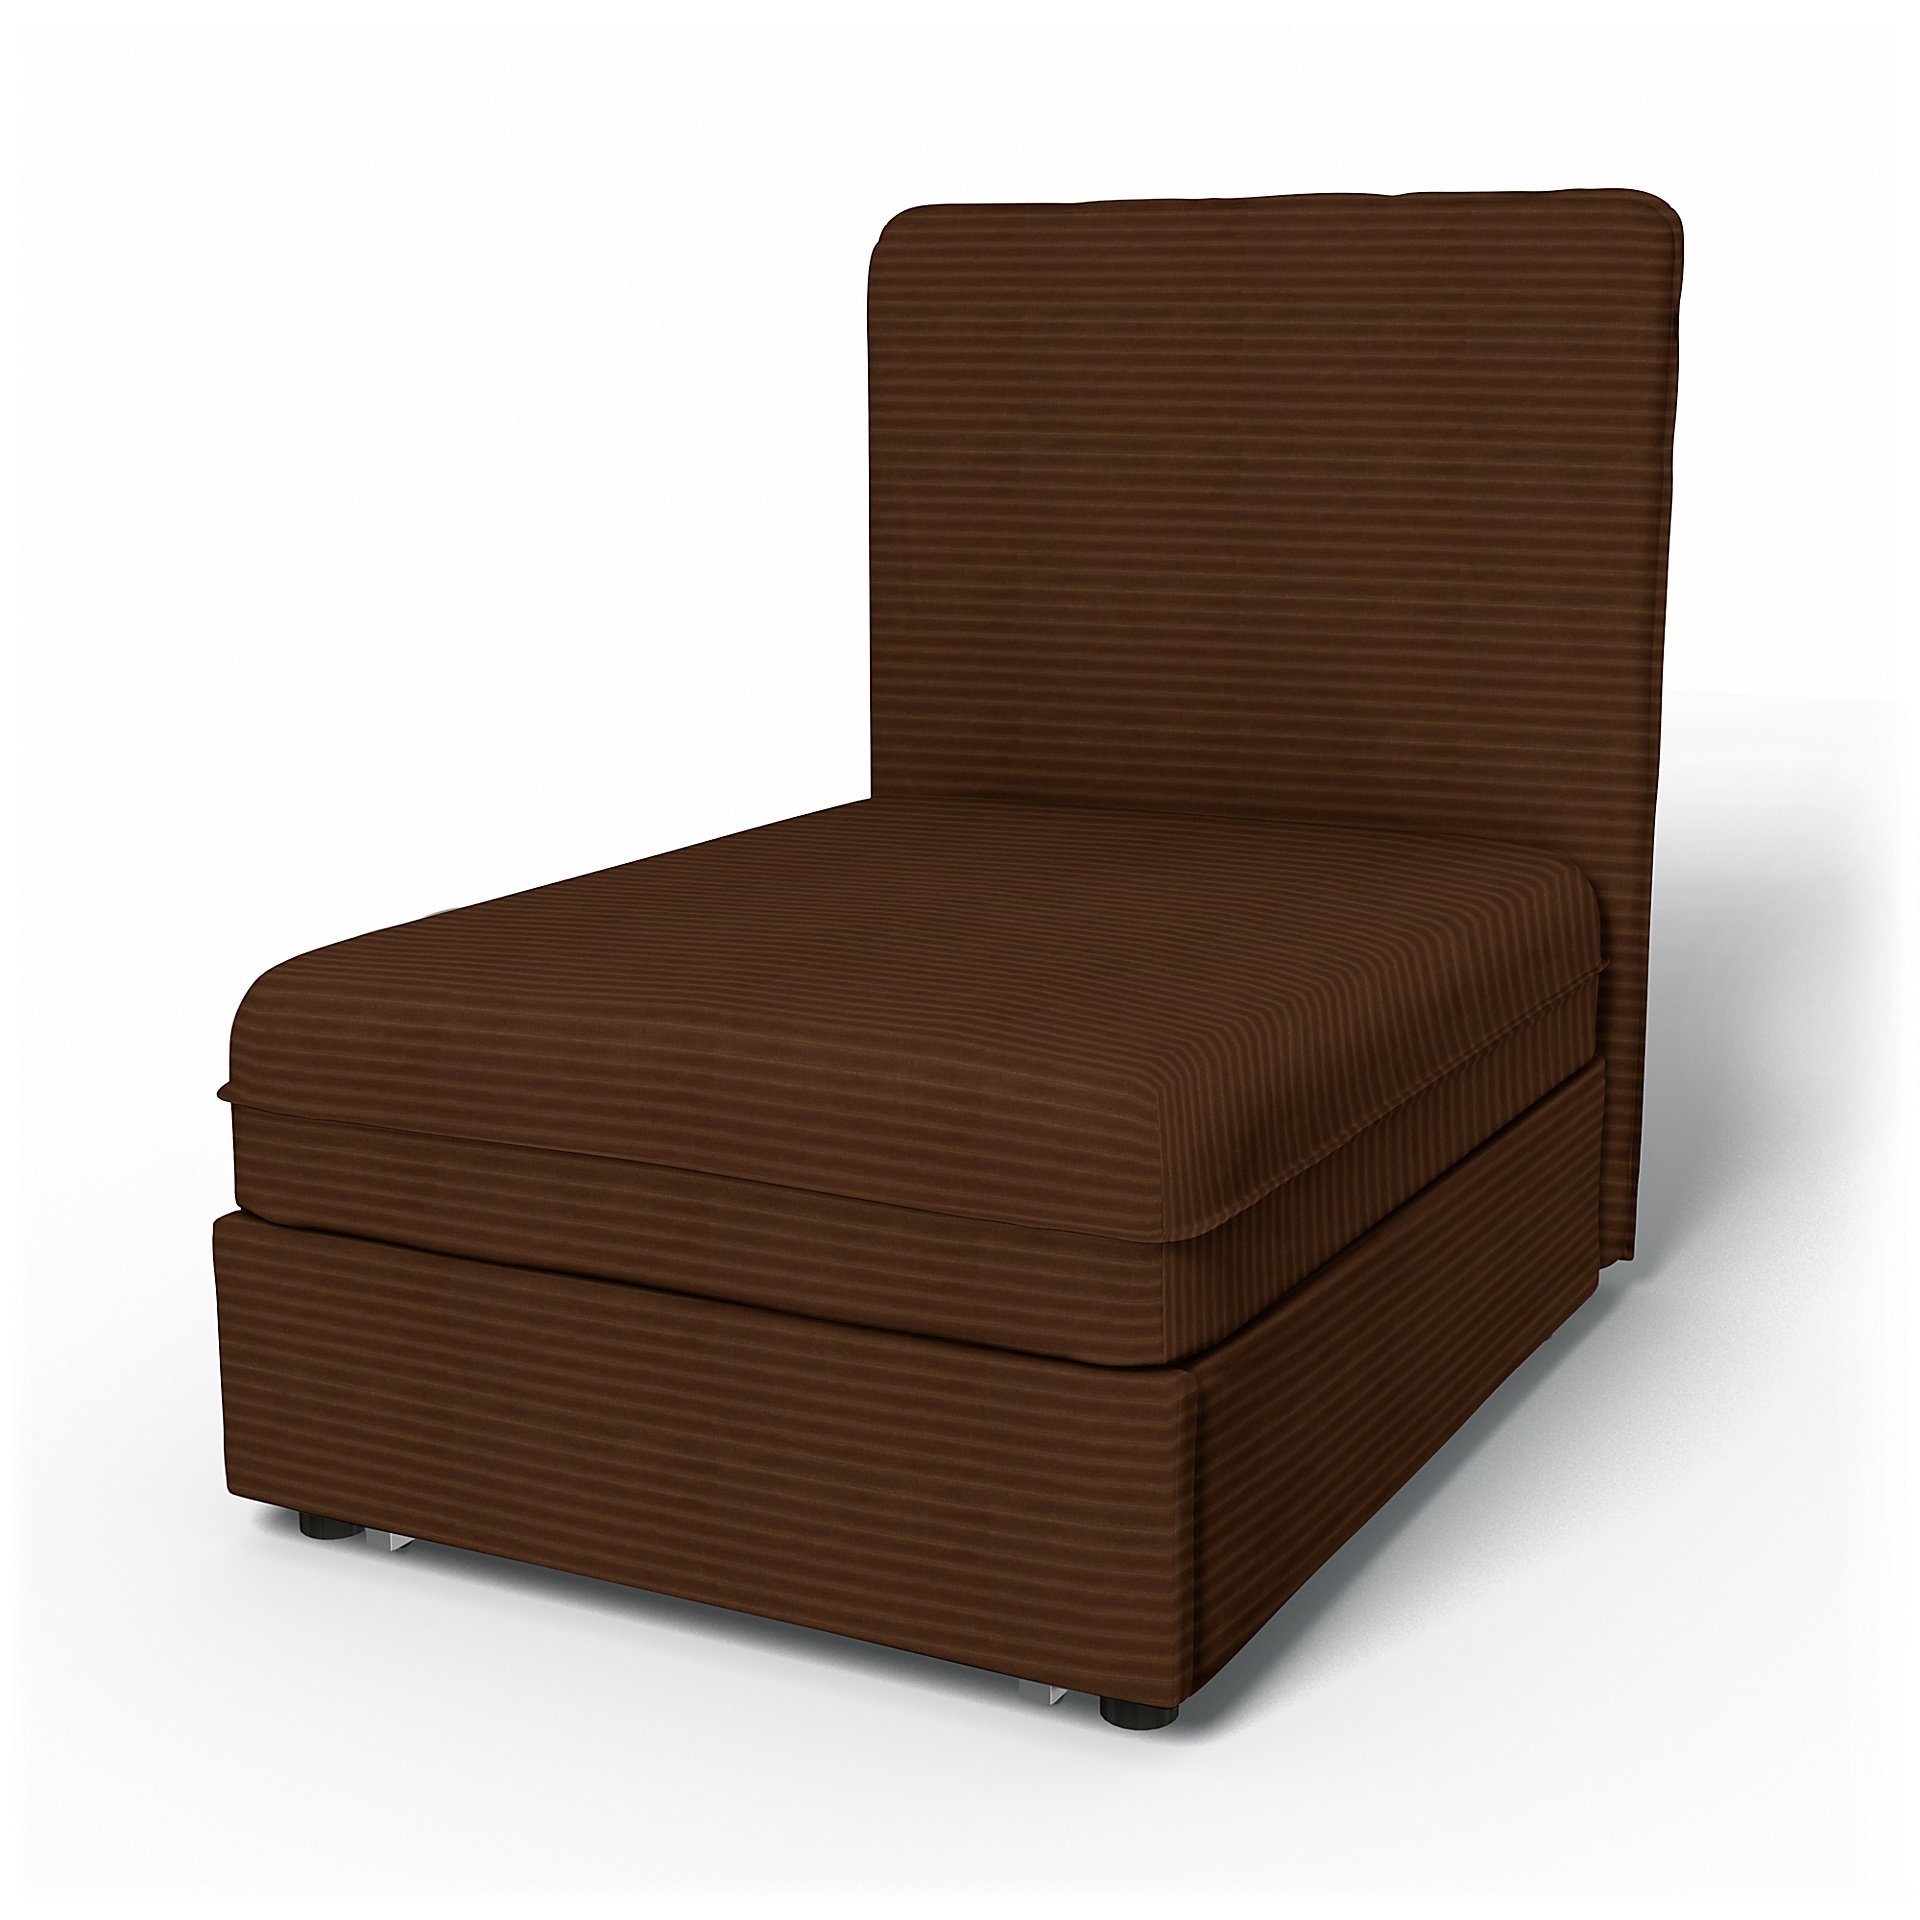 IKEA - Vallentuna Seat Module with High Back Sofa Bed Cover (80x100x46cm), Chocolate Brown, Corduroy